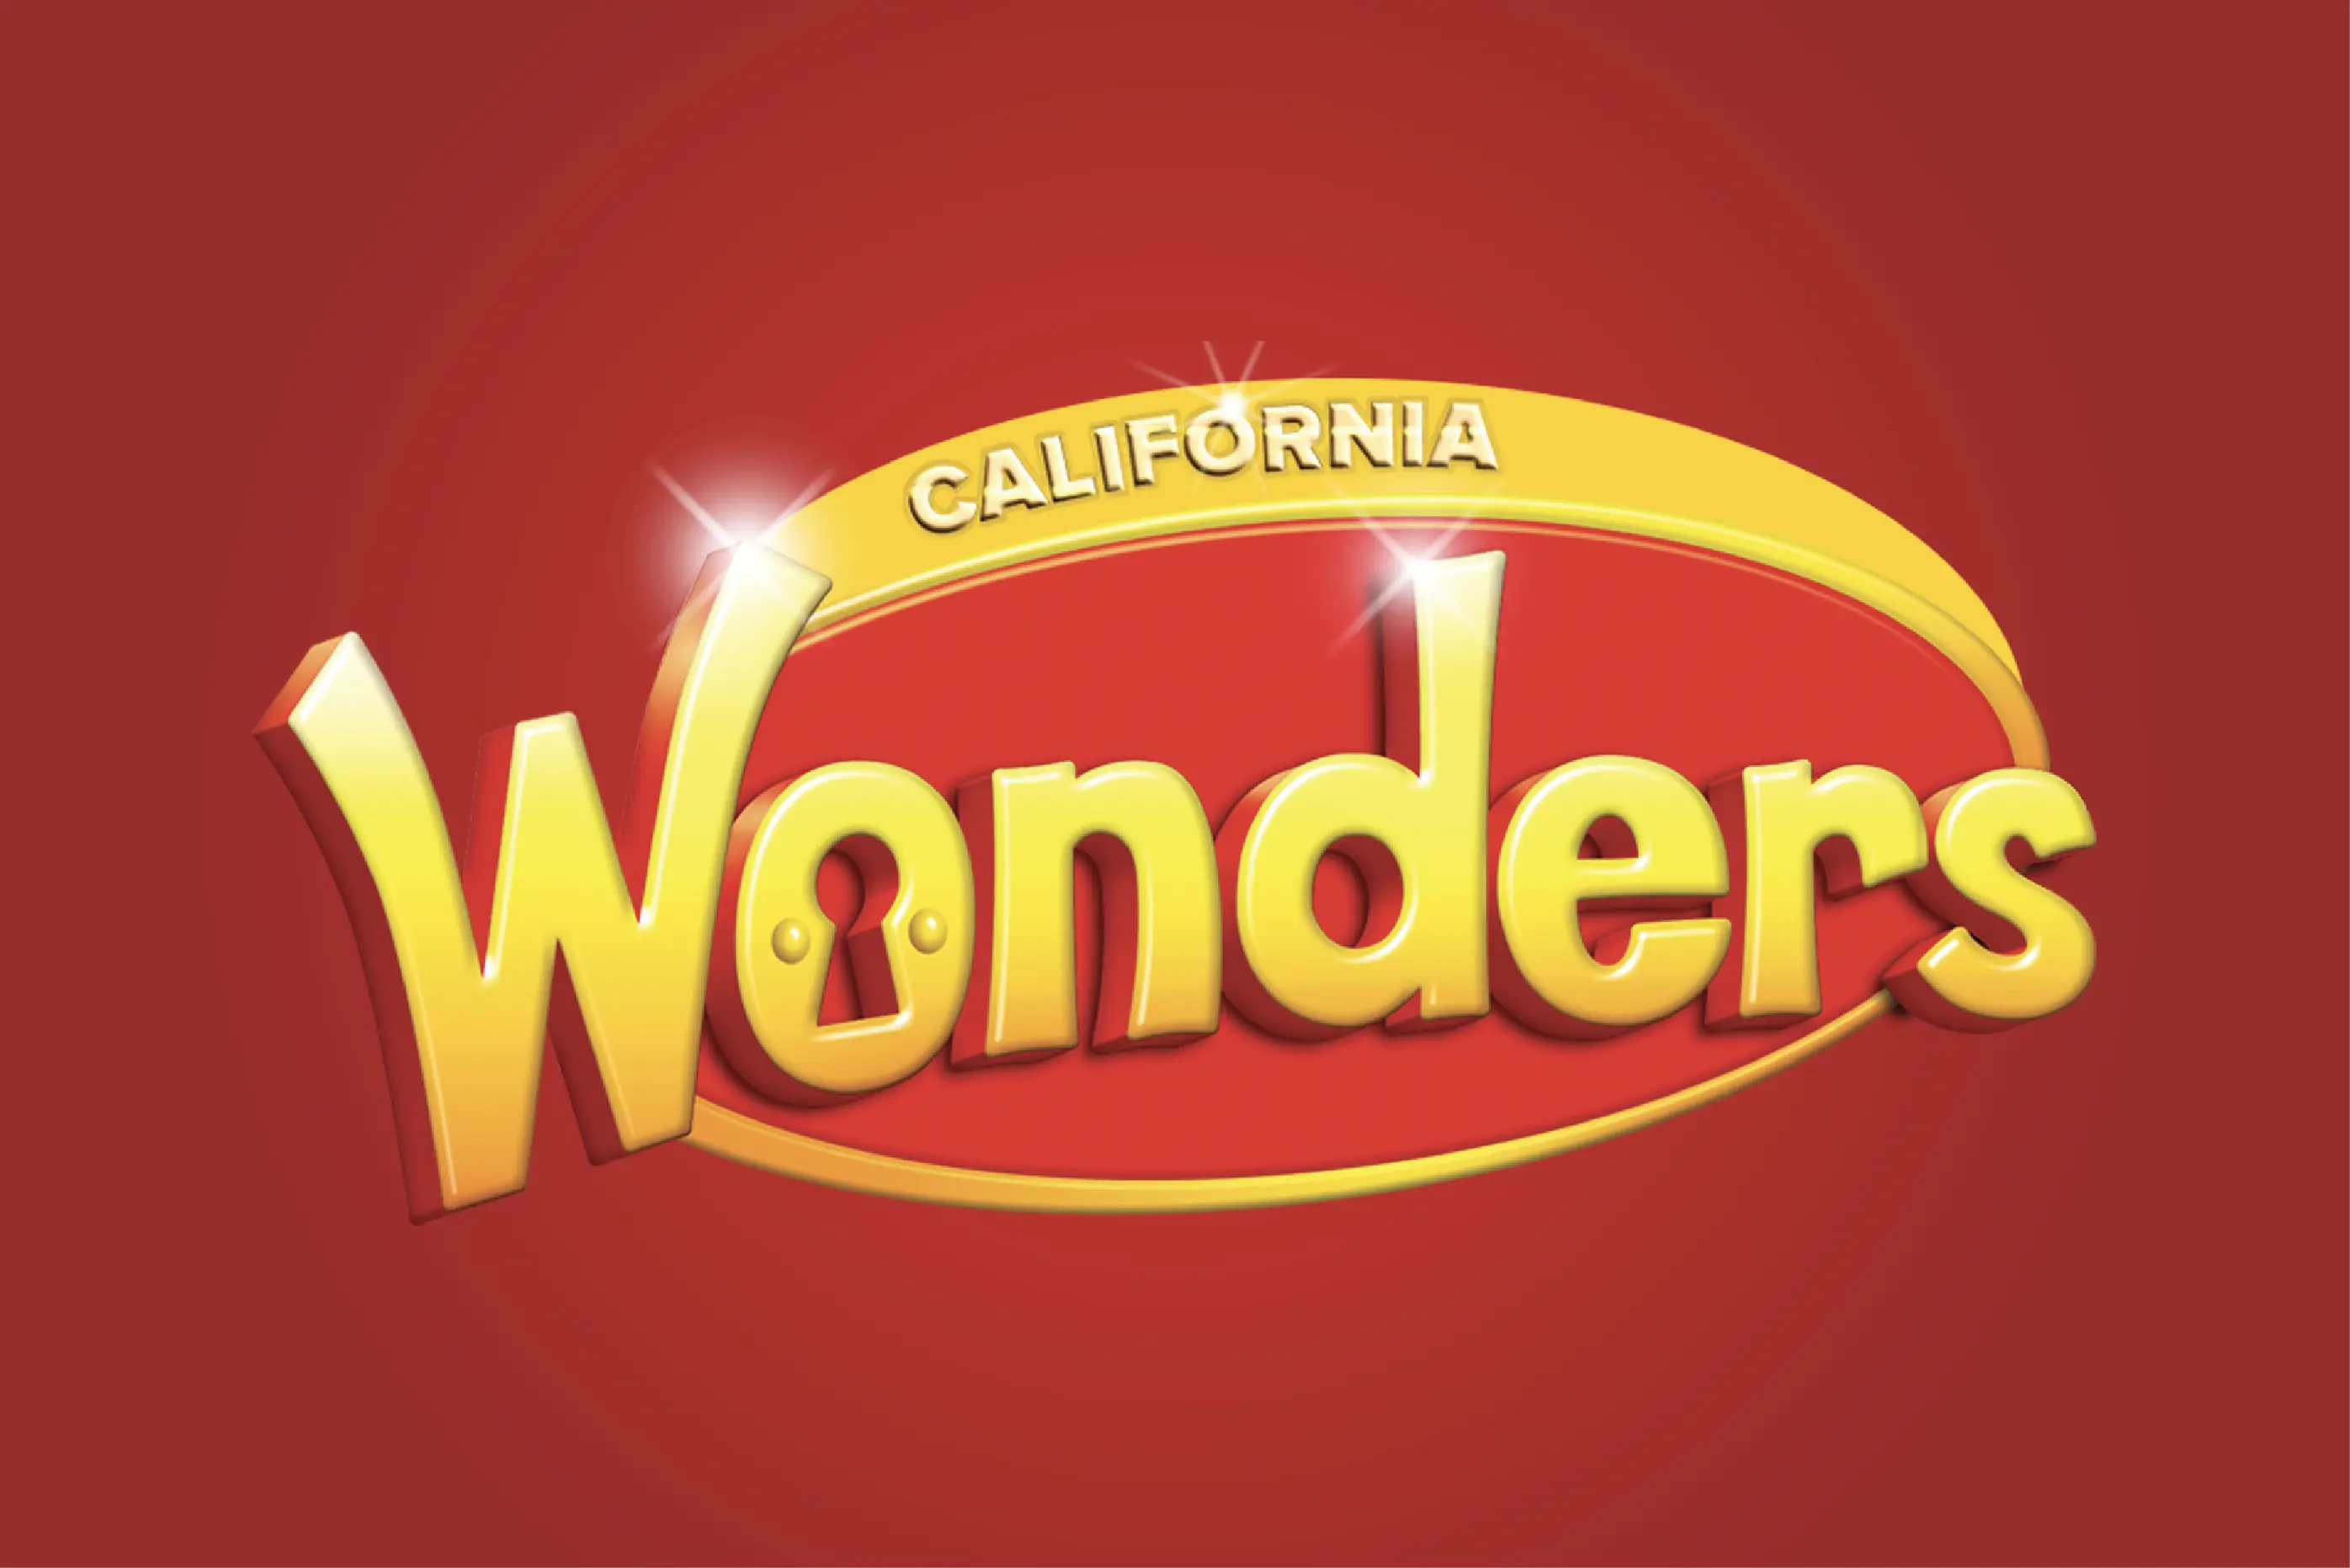 California Wonders logo